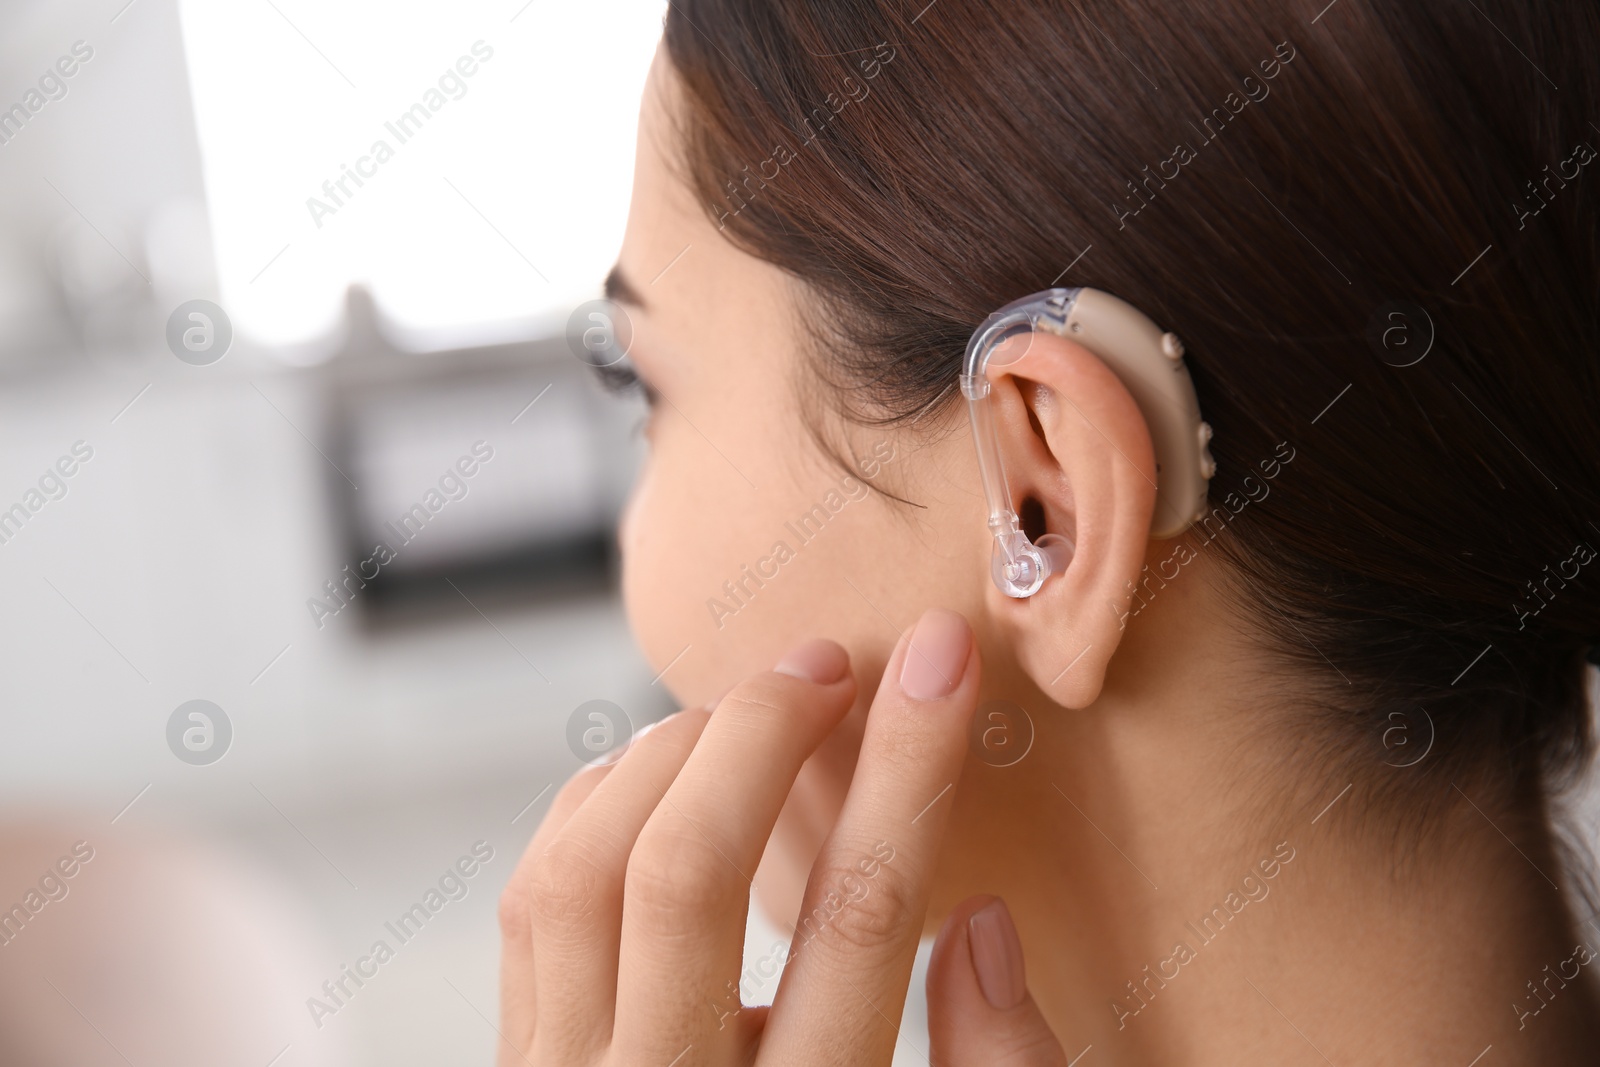 Photo of Young woman adjusting hearing aid indoors, closeup